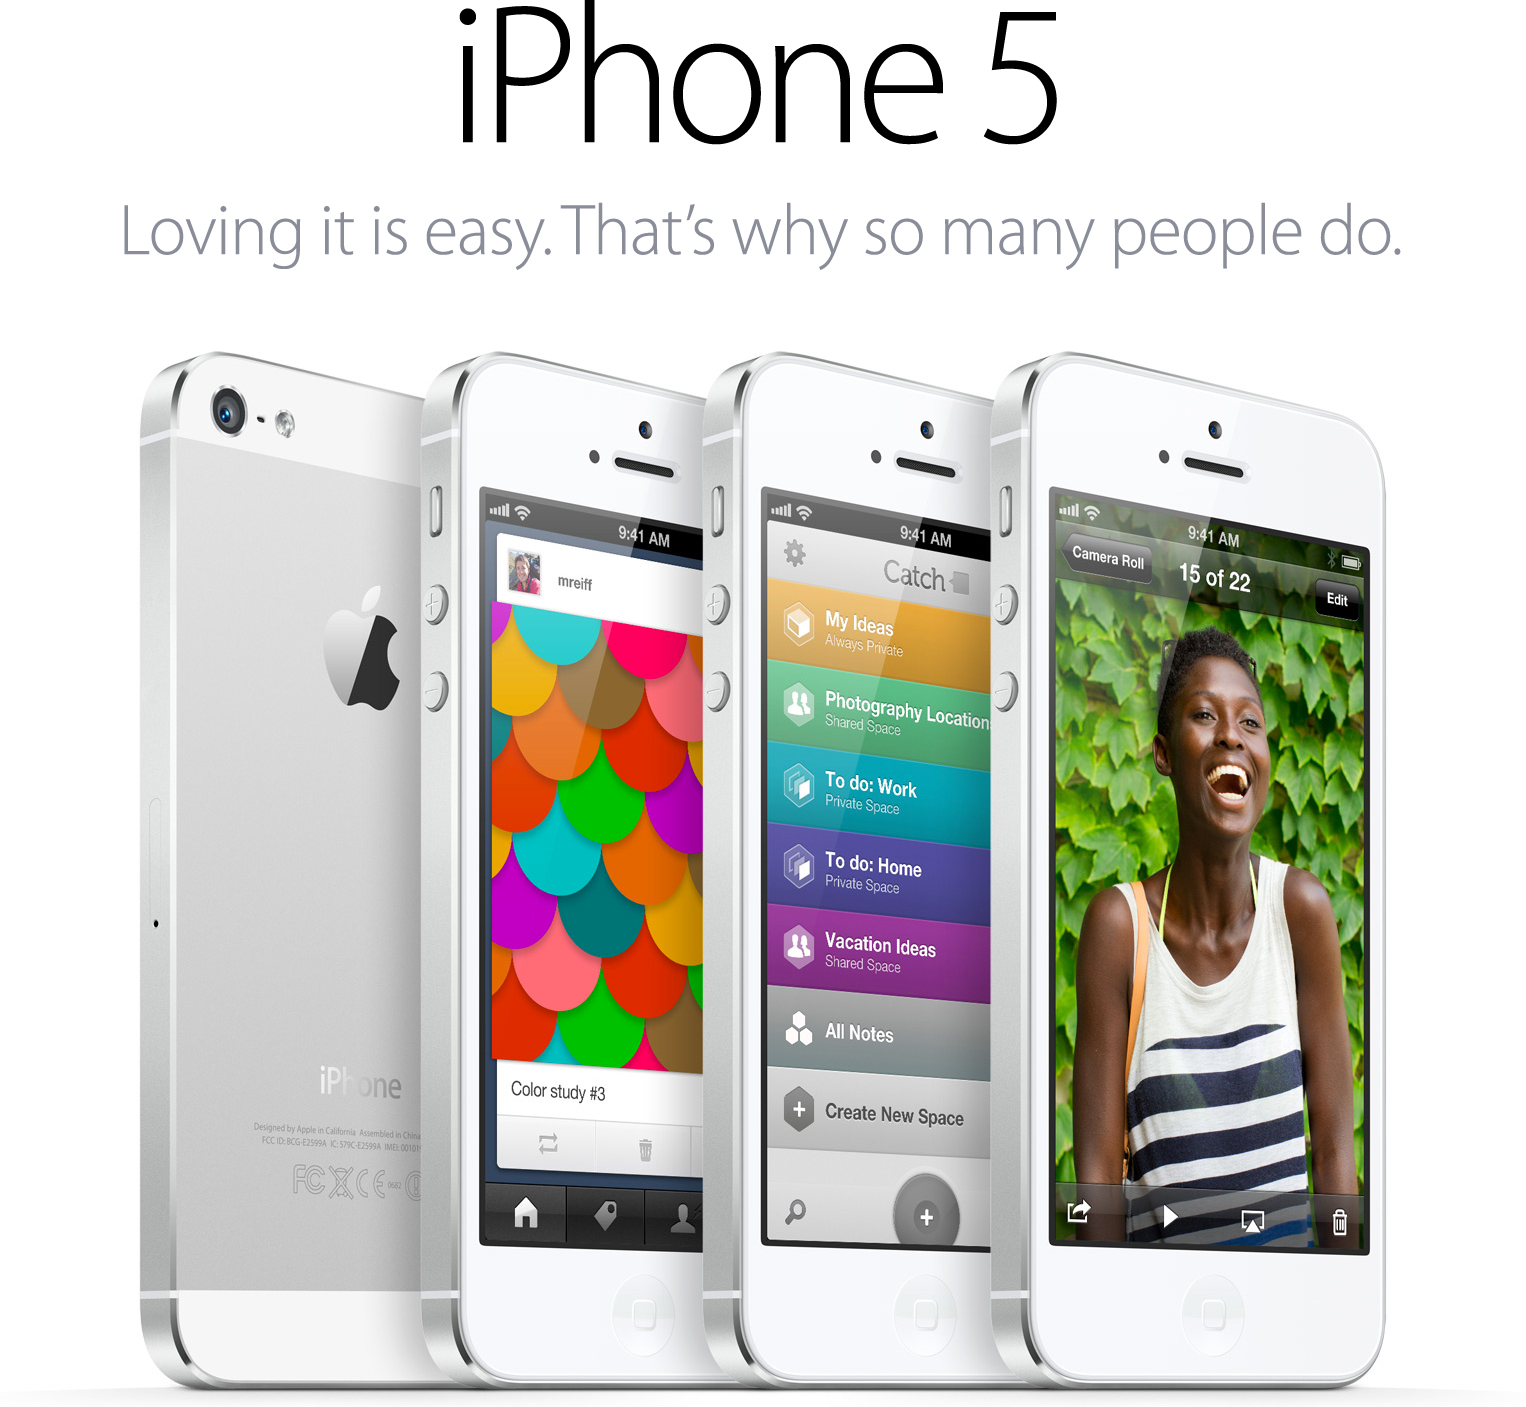 Novo slogan do iPhone 5